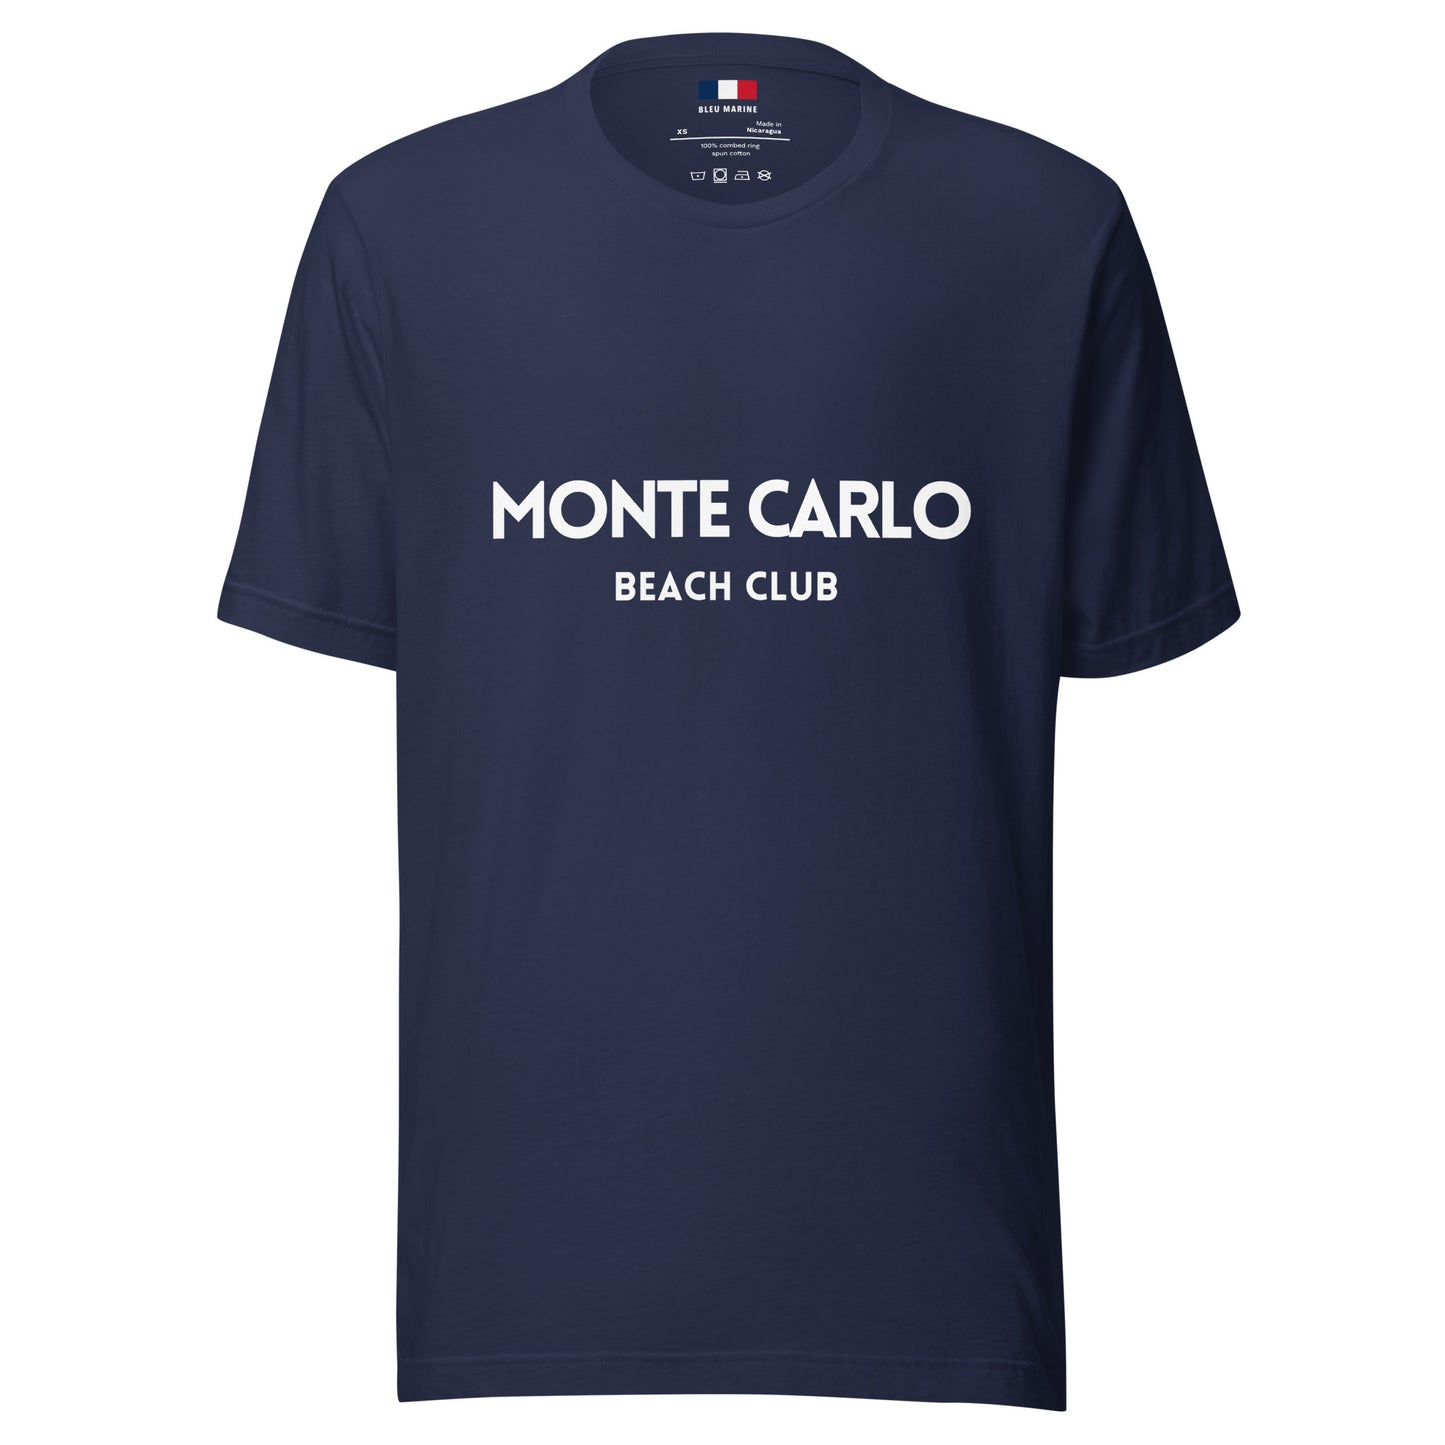 Monte Carlo Tee